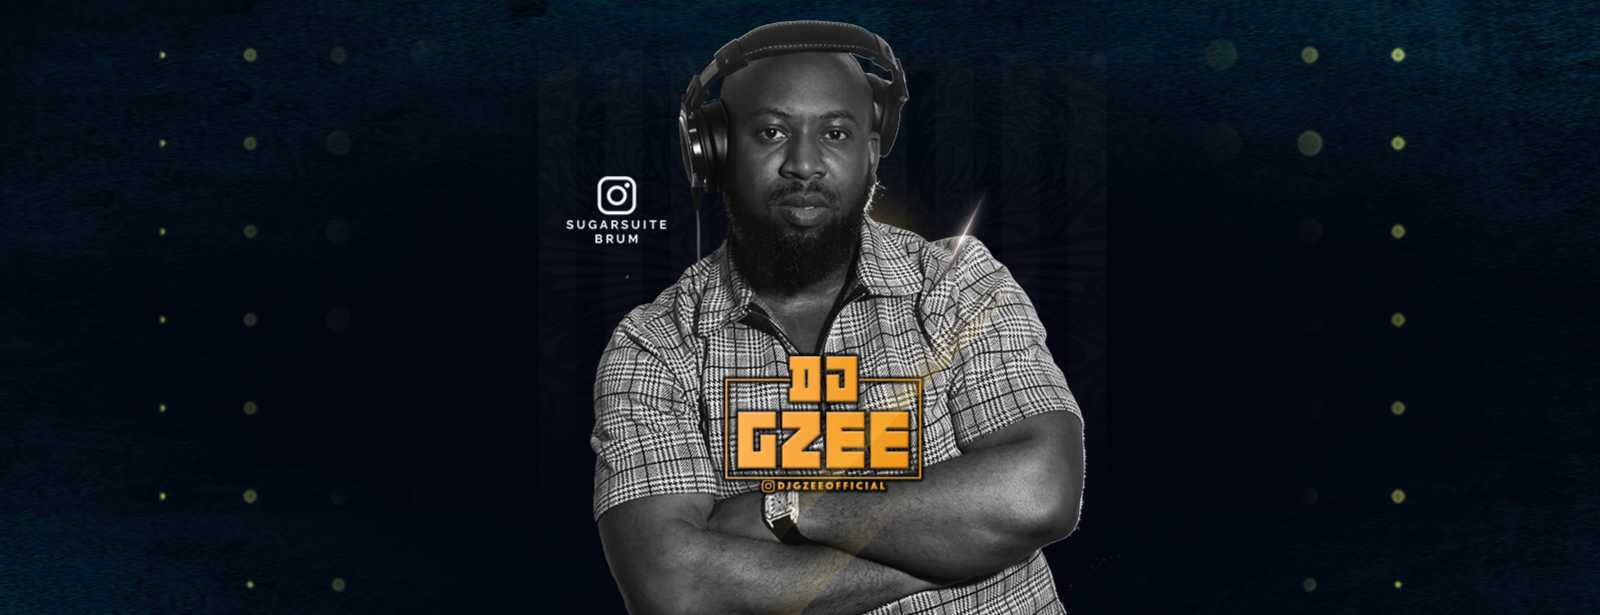 DJ GZEE (3 Hour Set) at SugarSuite